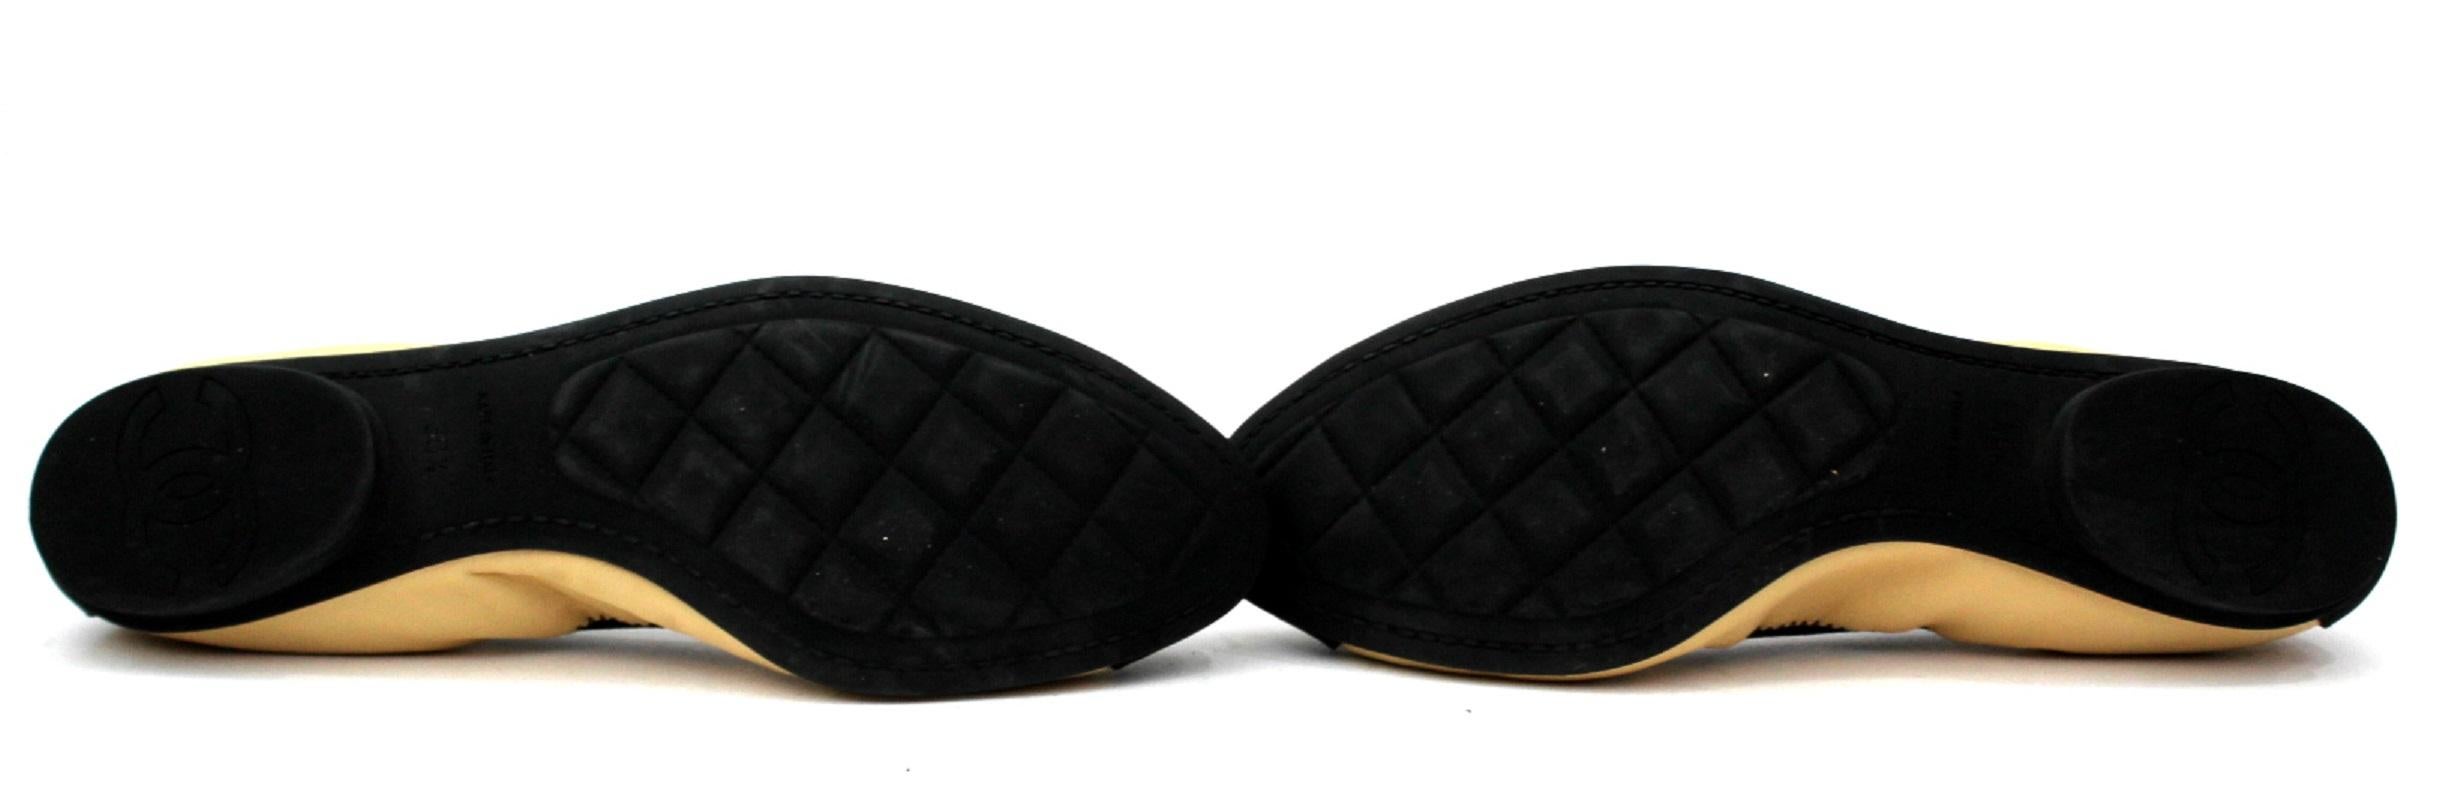 Chanel Callerinas Beige/Black Leather  1